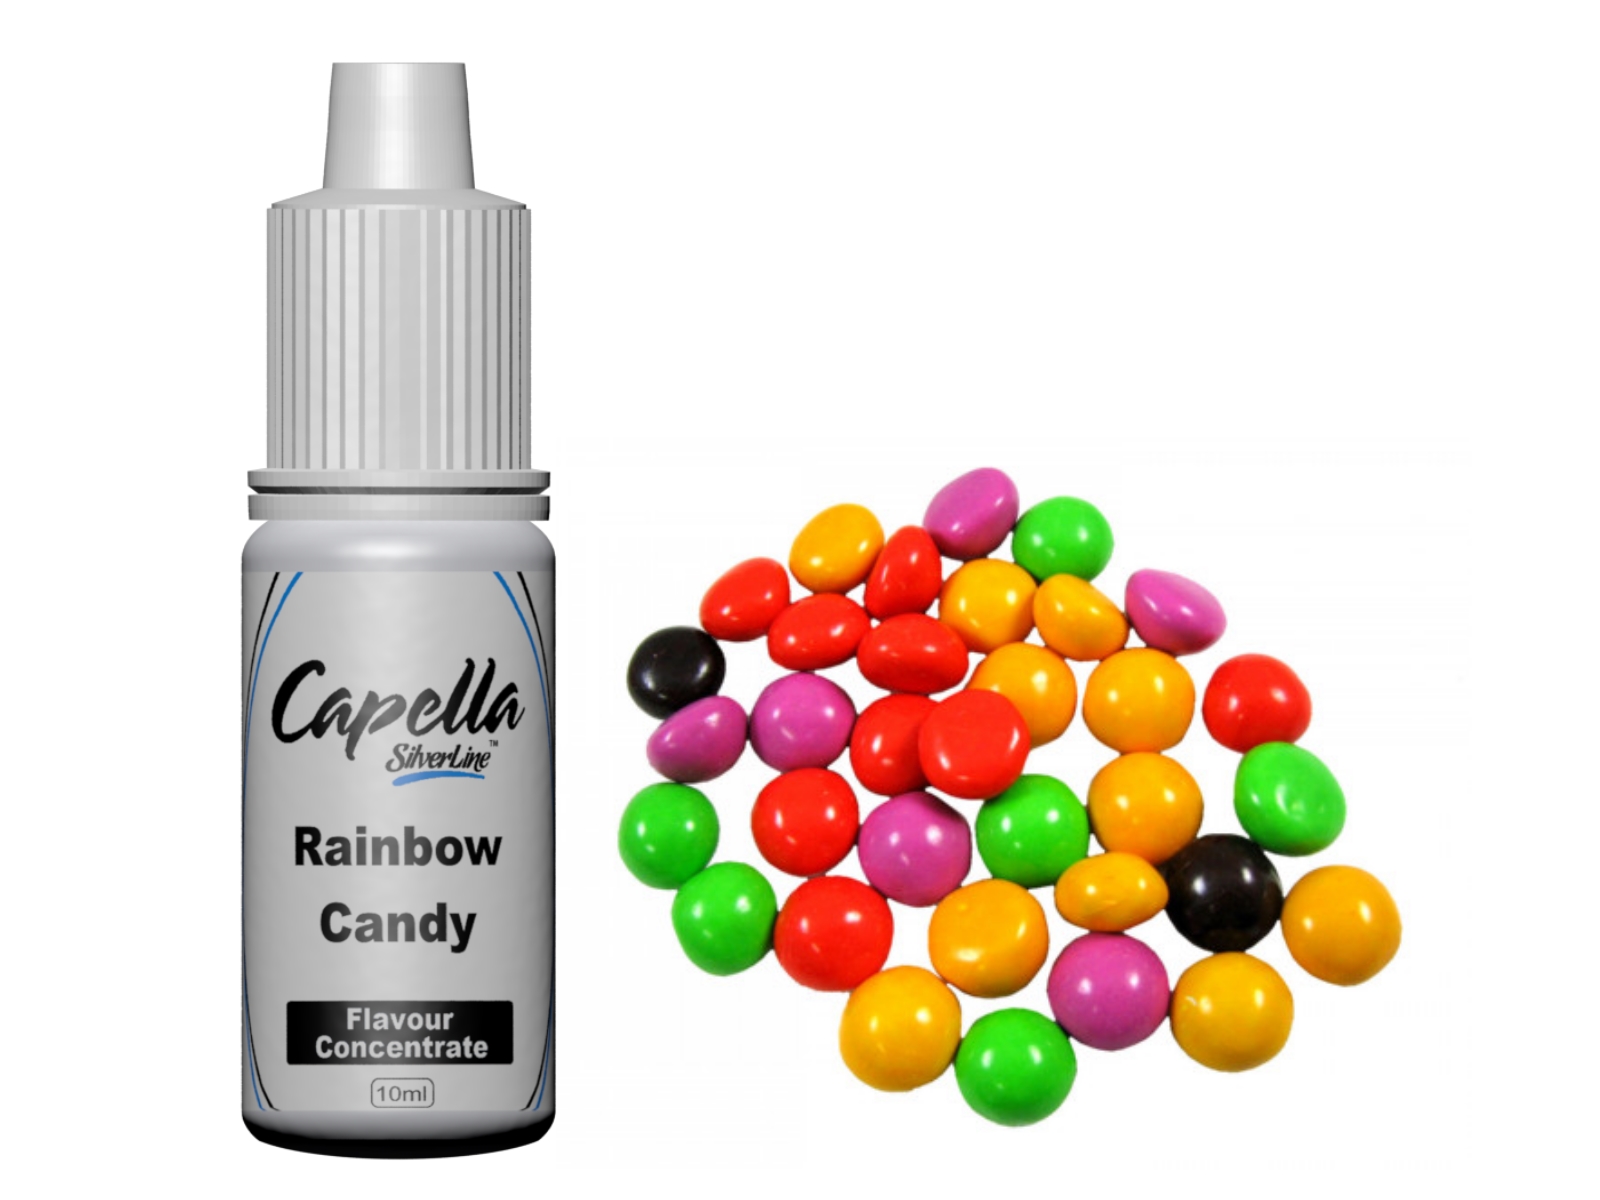 Capella Silverline Rainbow Candy